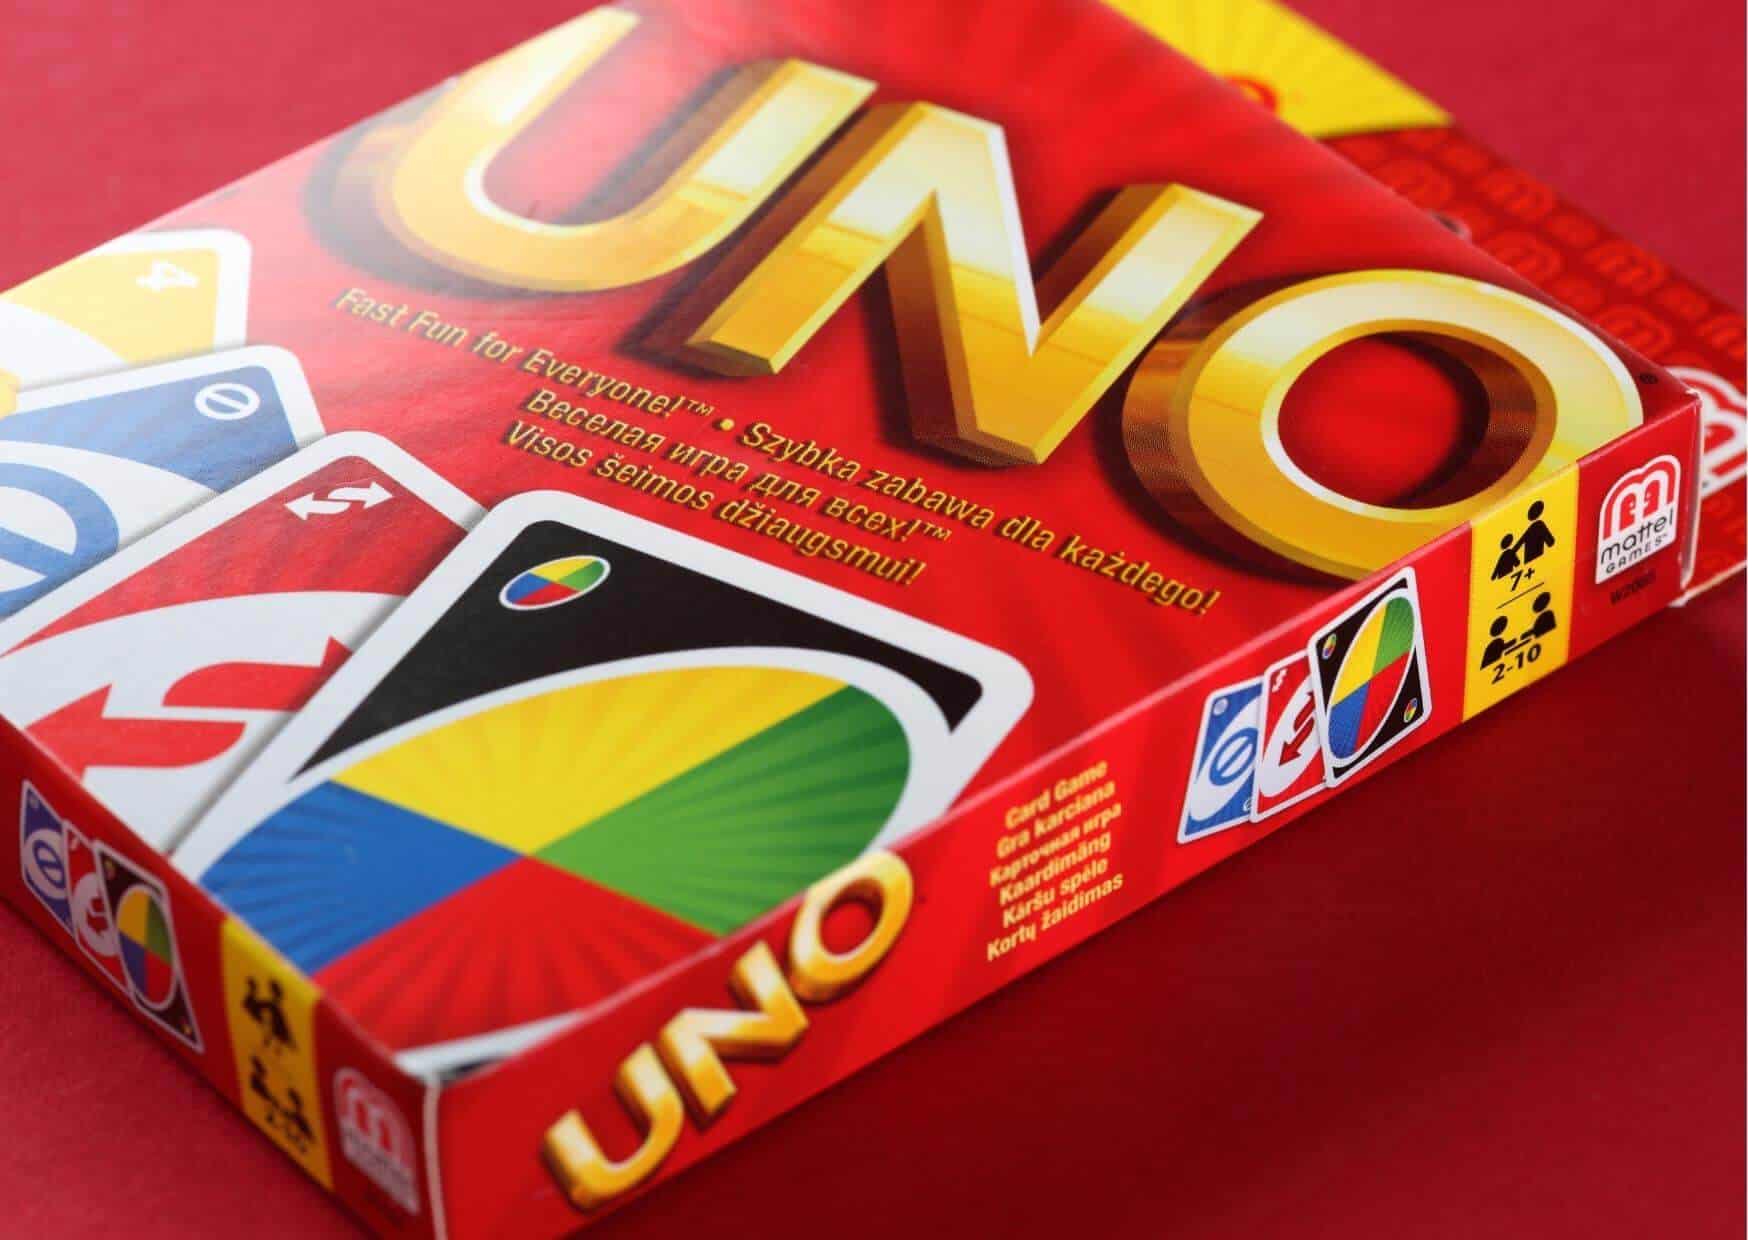 Games like UNO